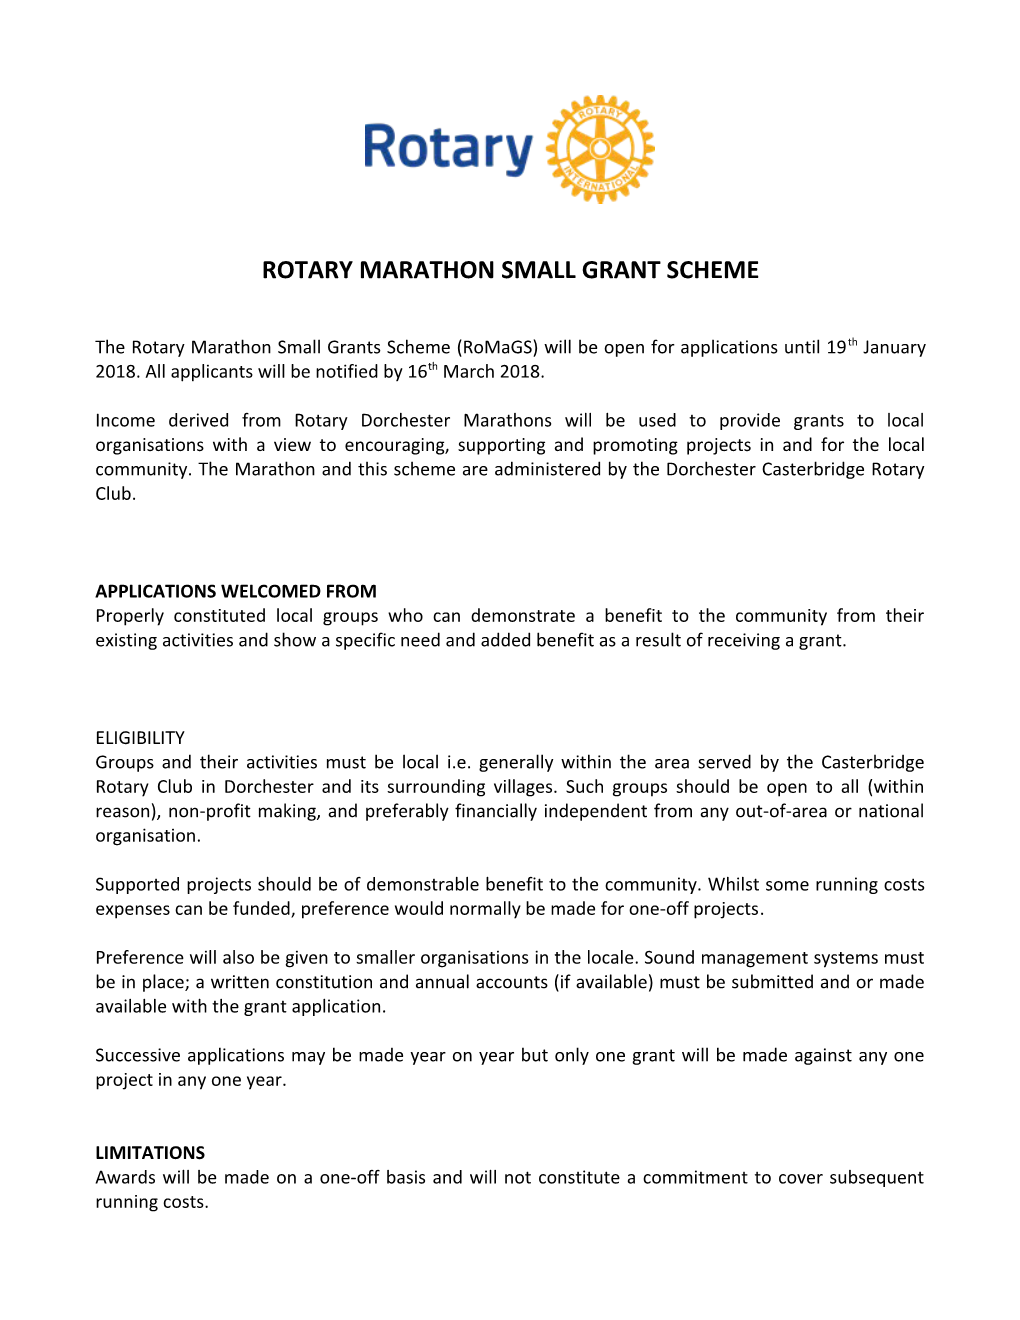 Rotary Marathon Small Grant Scheme